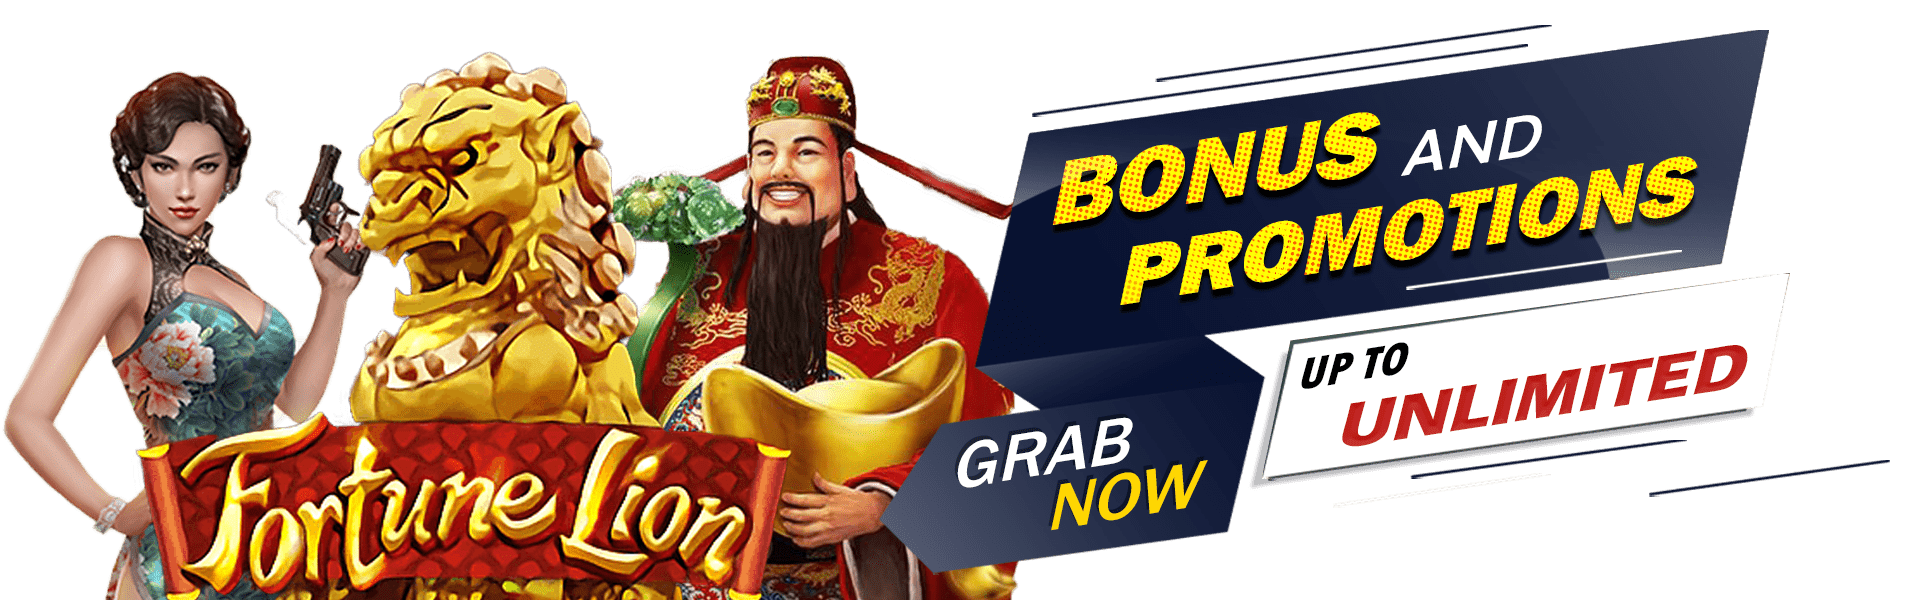 sa gaming bonus and promotion banner